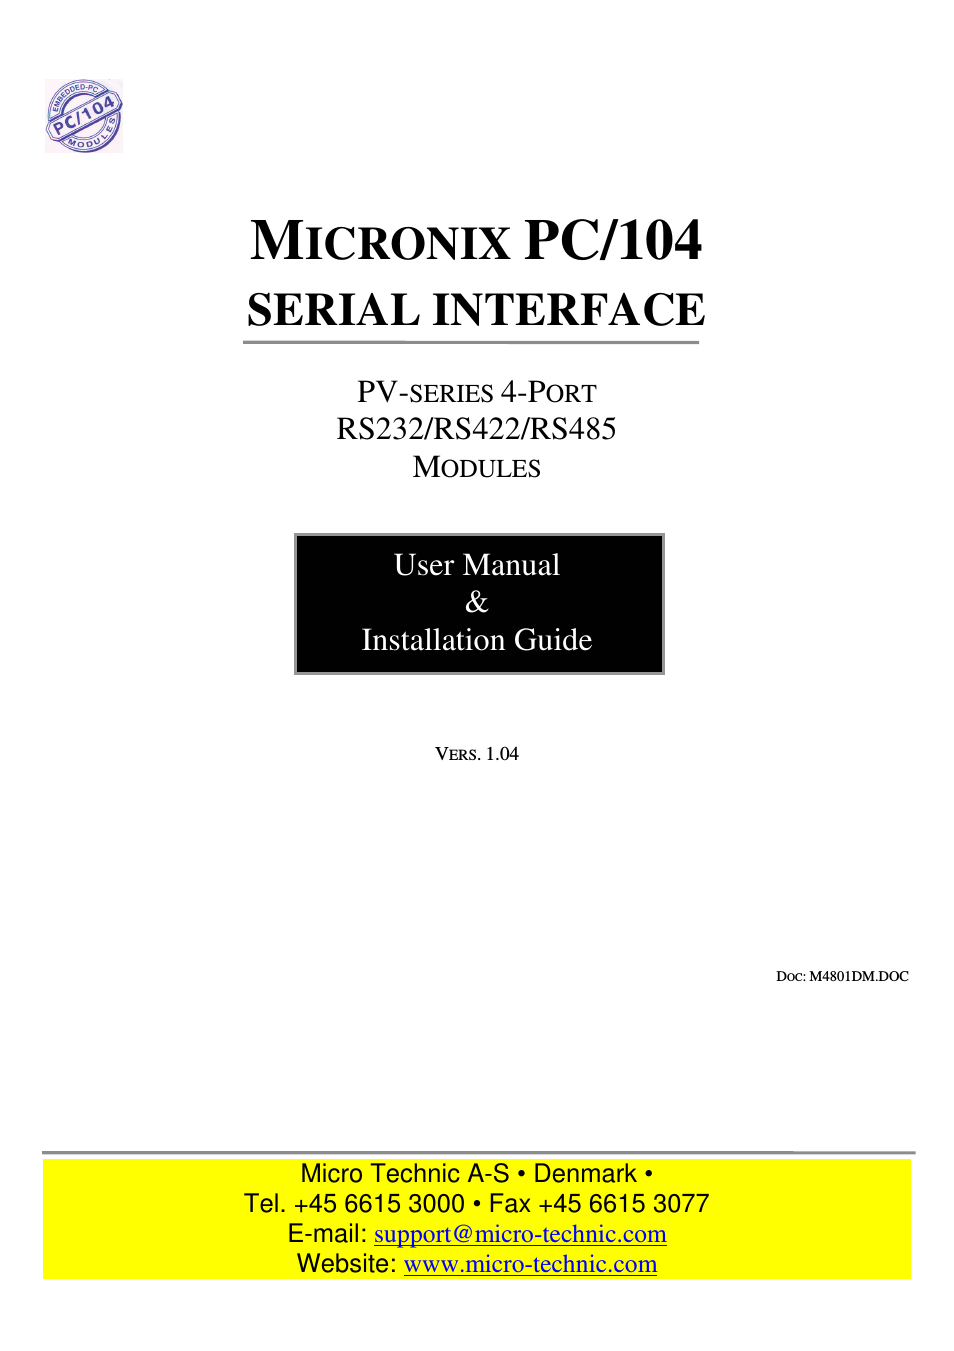 Micronix RS232